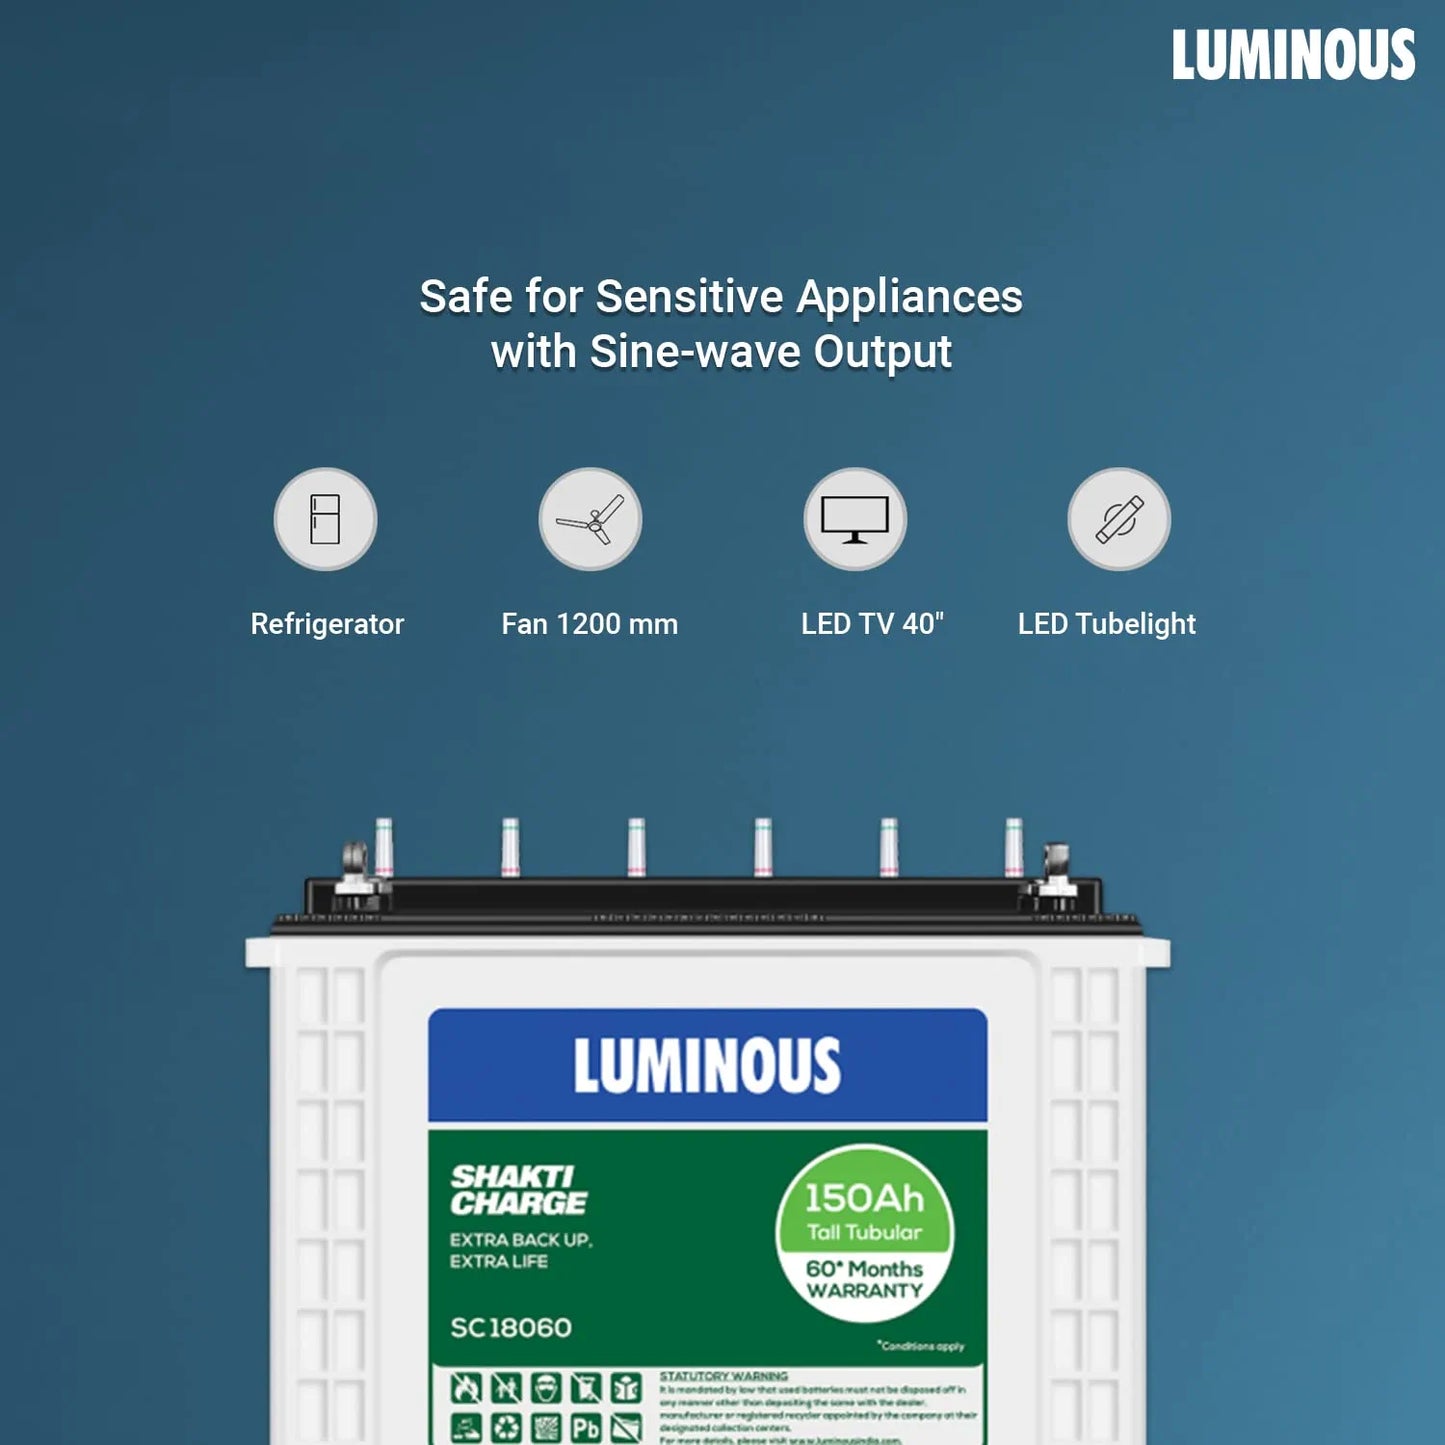 Luminous SC18060 150Ah Shakti Charge Tall Tubular Battery Warranty 60 Months